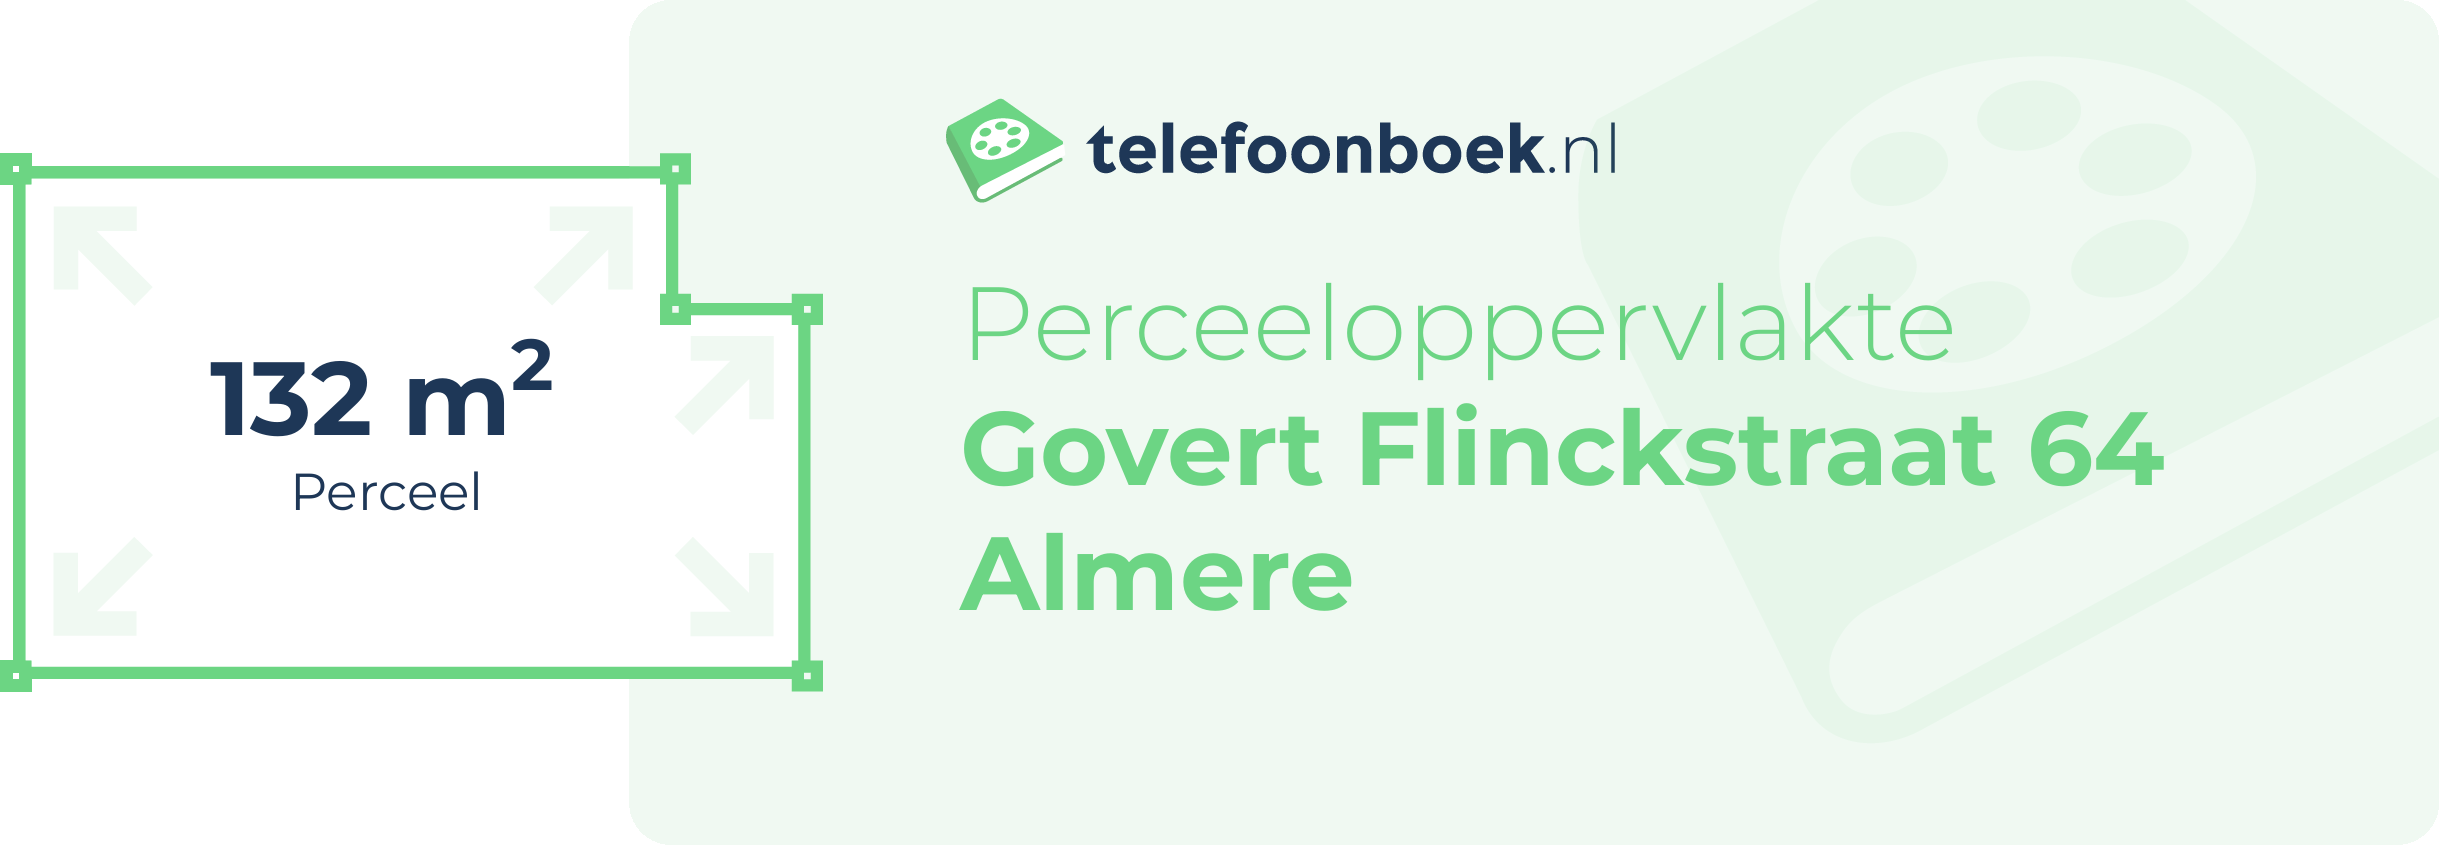 Perceeloppervlakte Govert Flinckstraat 64 Almere